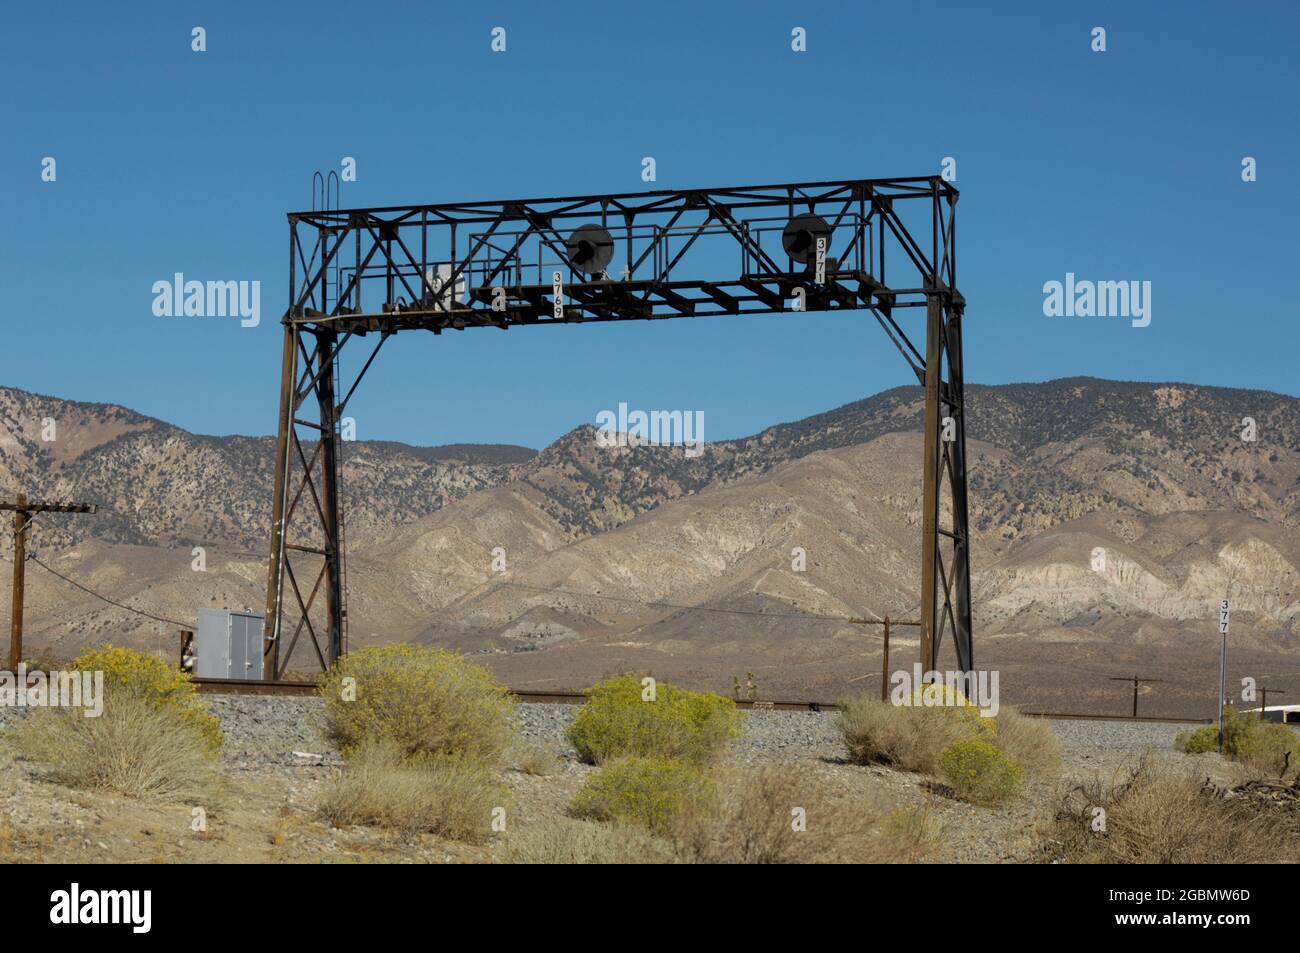 Railroad signal bridge near Mojave, California Stock Photo